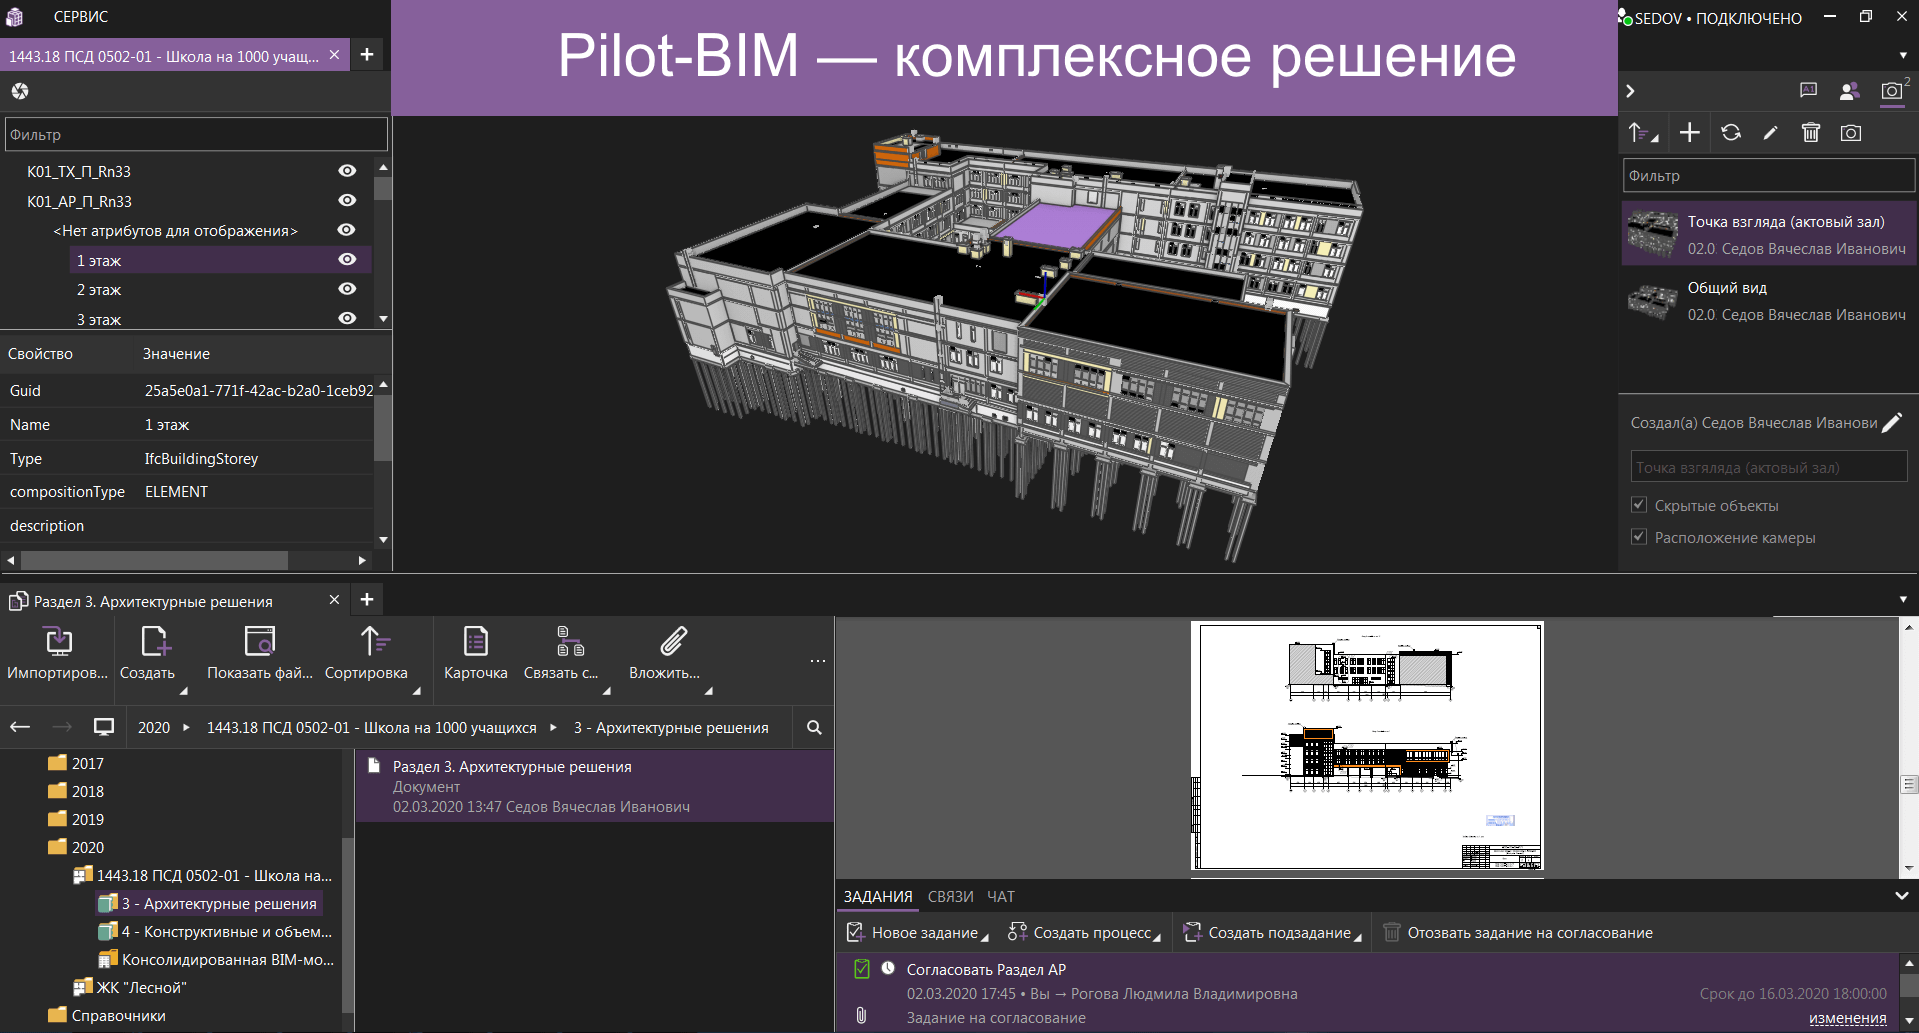 Pilot-BIM